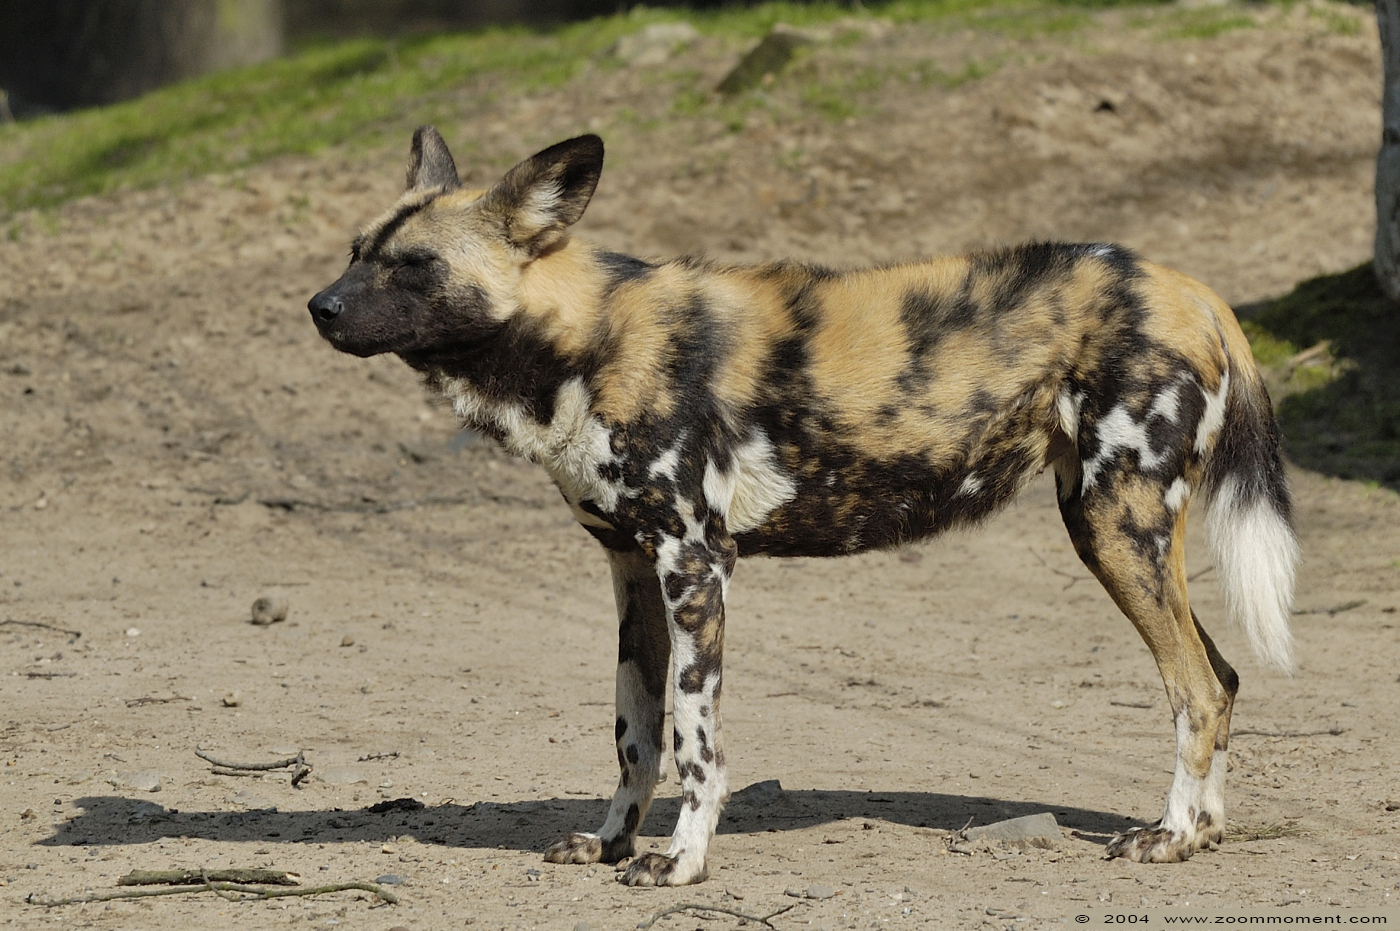 Afrikaanse wilde hond  ( Lycaon pictus )  African wild dog
Trefwoorden: Zoo Duisburg Lycaon pictus Afrikaanse wilde hond African wild dog